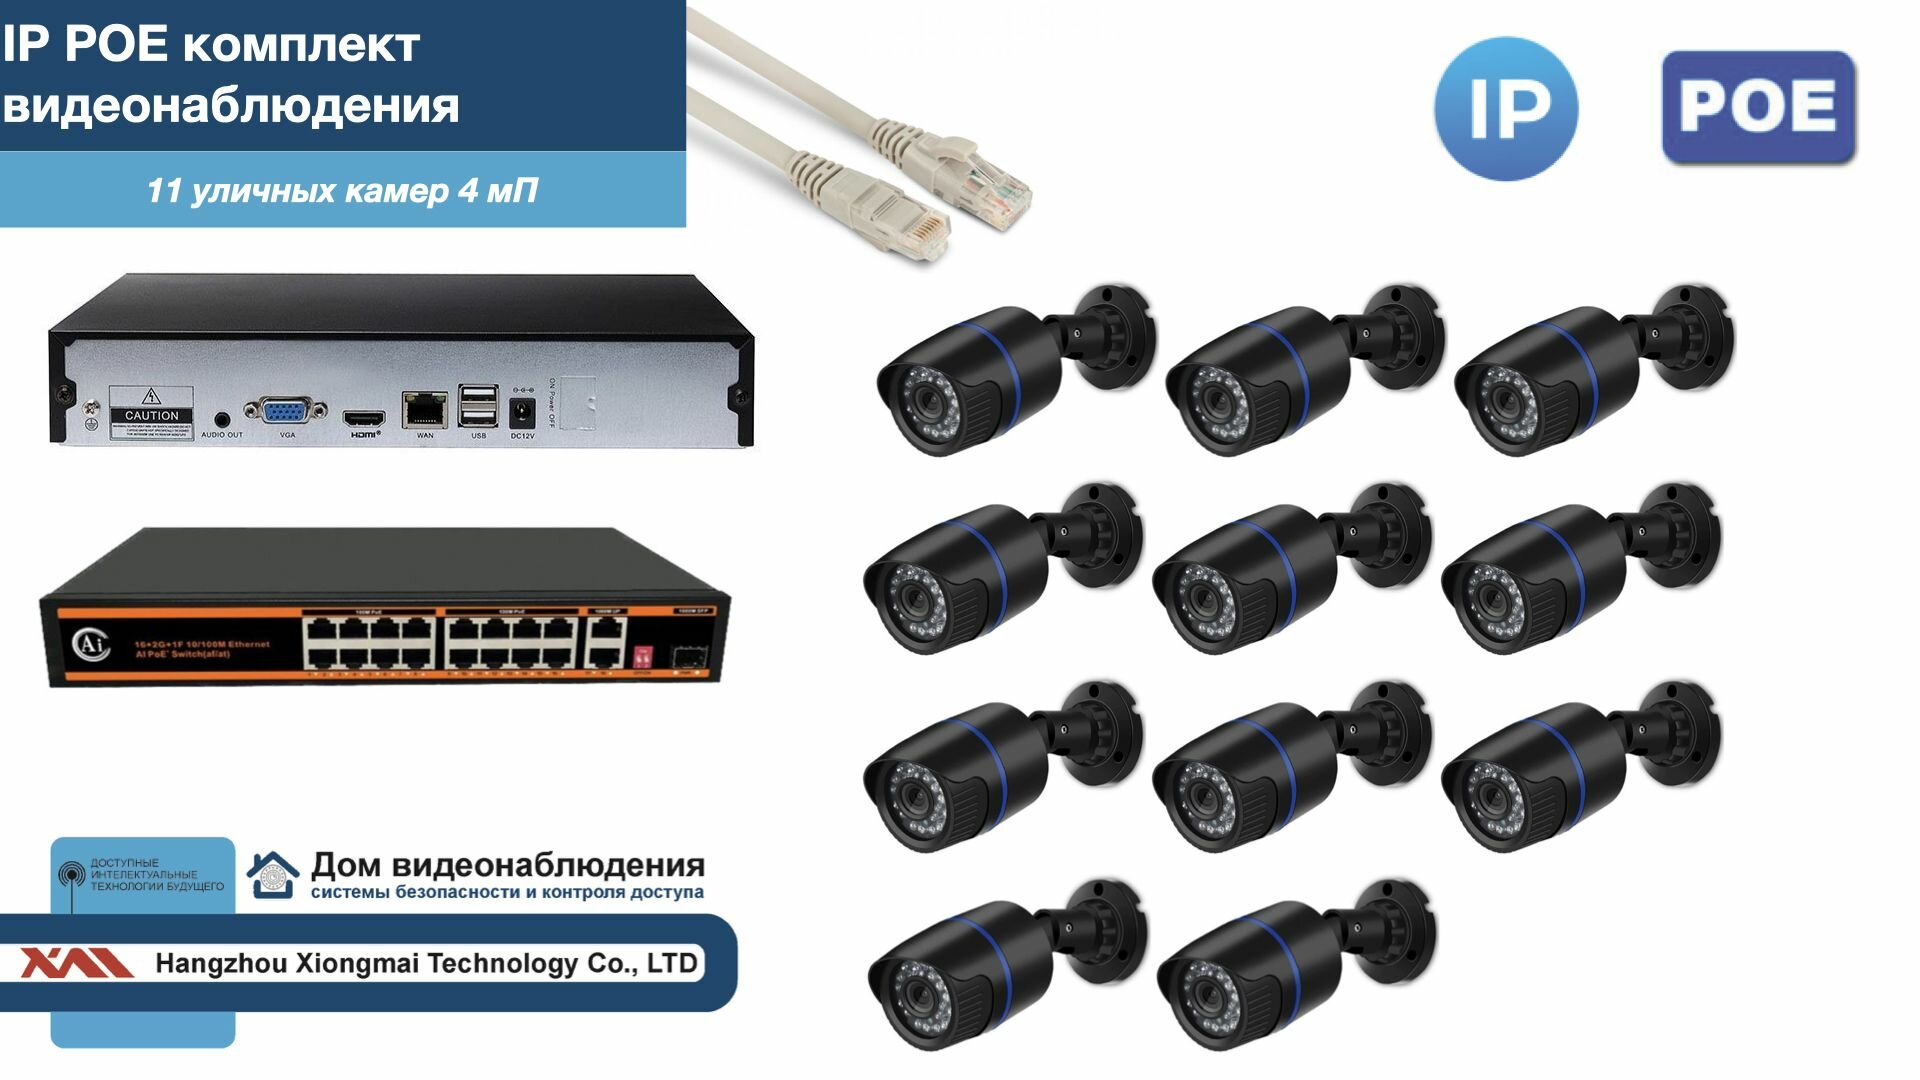 Полный IP POE комплект видеонаблюдения на 11 камер (KIT11IPPOE100B4MP)